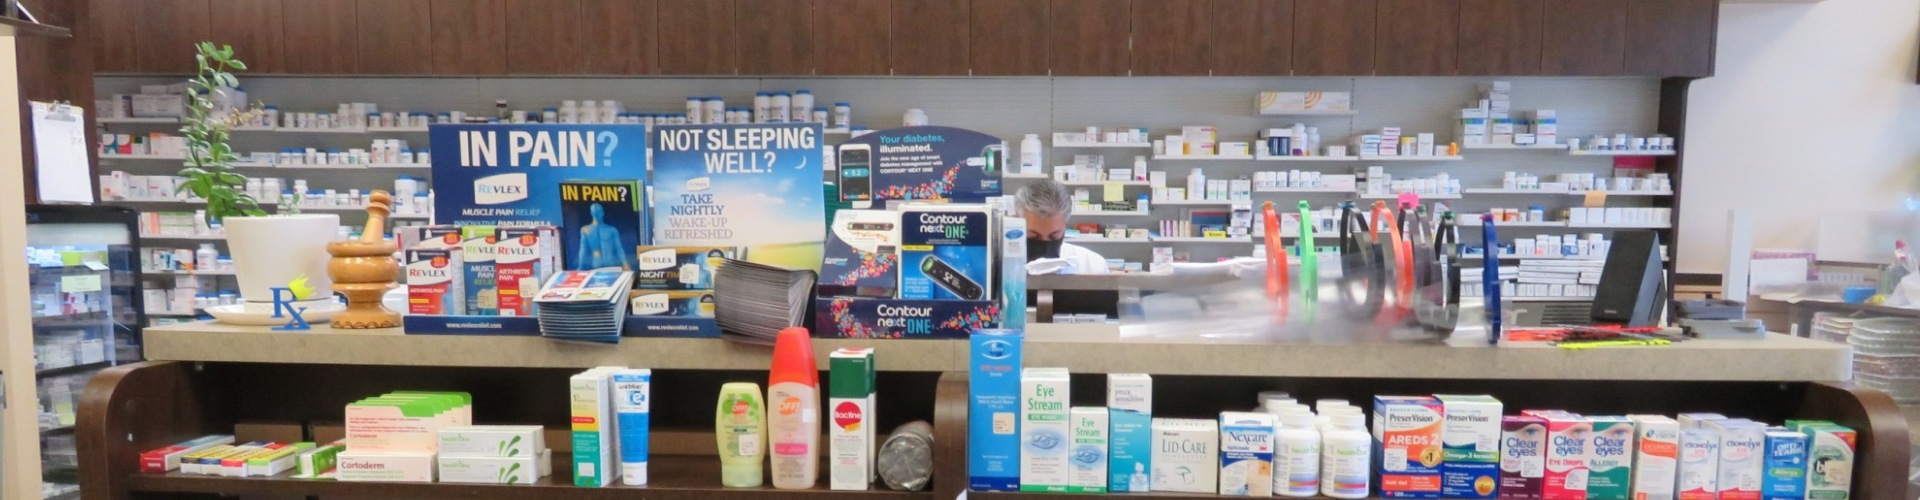 Refill prescriptions in Crown Point Pharmacy, Hamilton